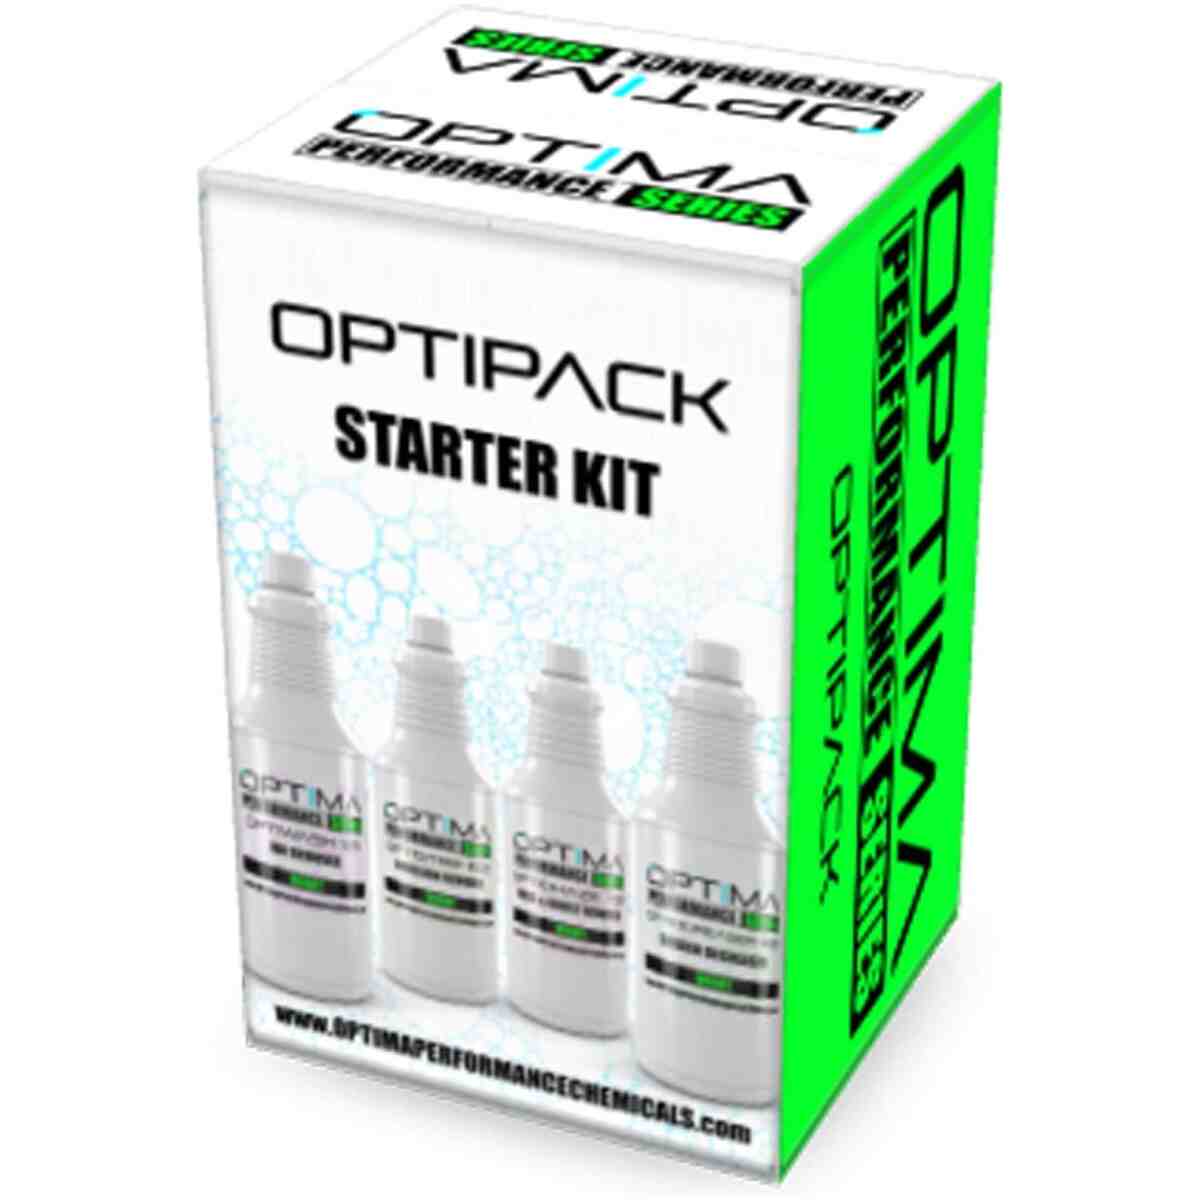 Opti-pack - Reclaim Starter Kit OPTIMA PERFORMANCE SERIES®